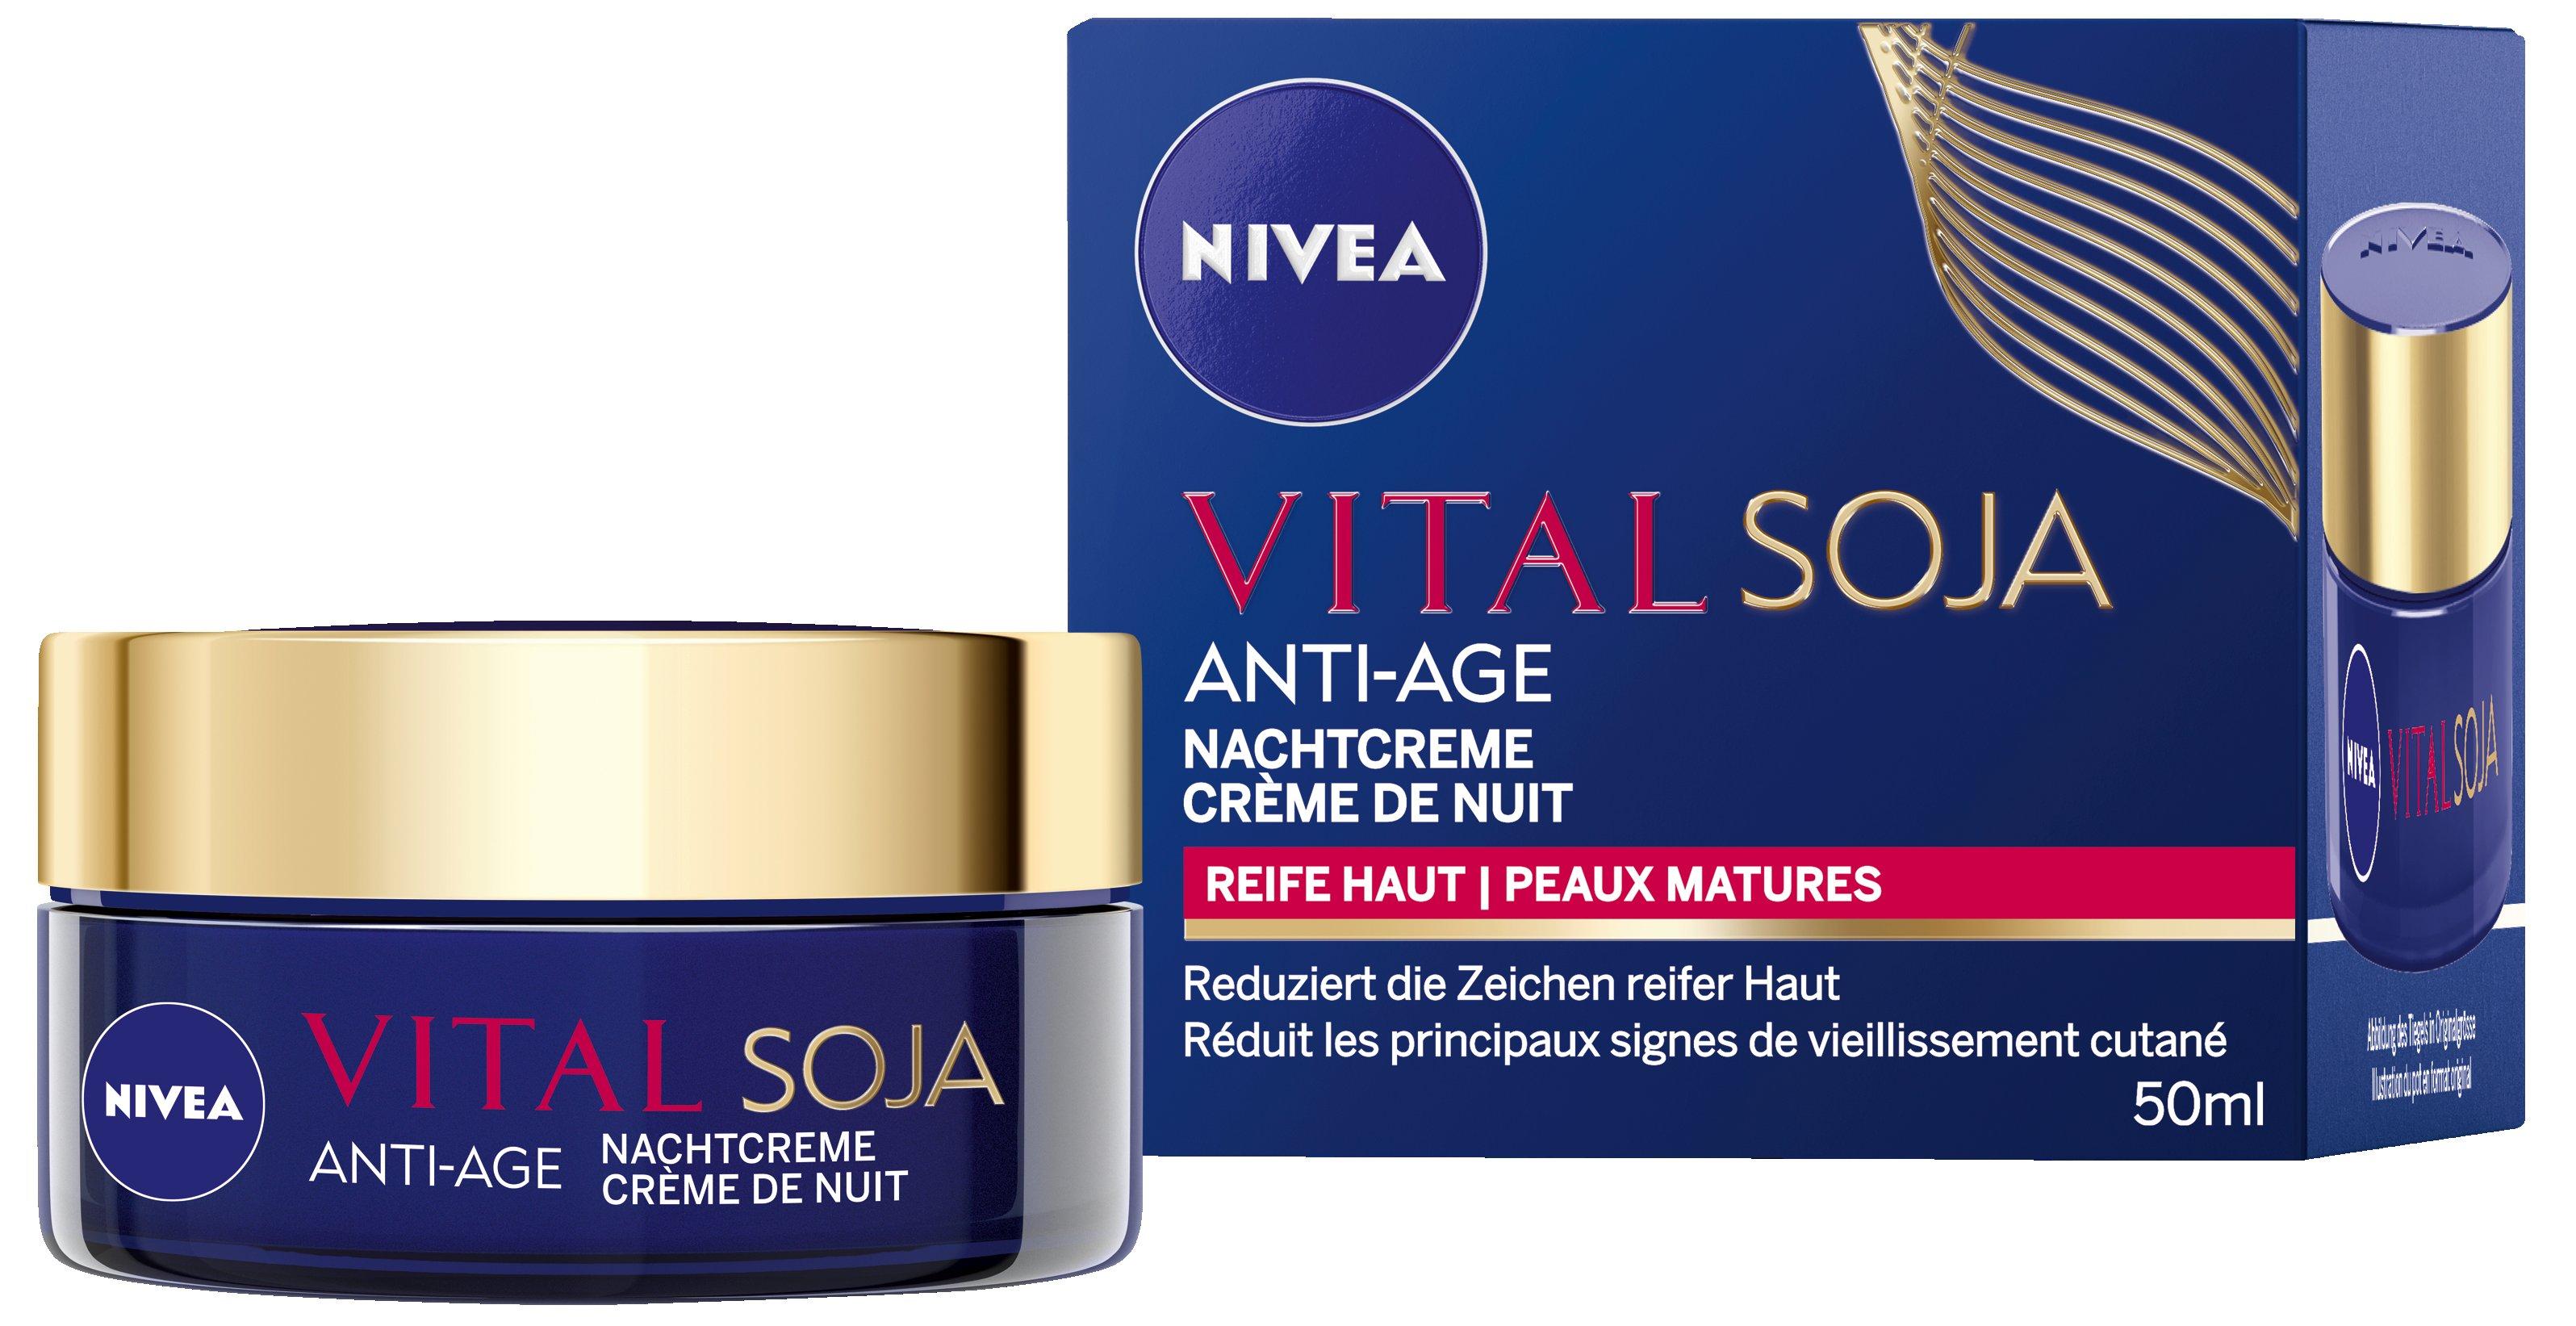 NIVEA Vital Soja Anti-Age Reife Haut Vital Soja Anti-Age Nachtcreme 